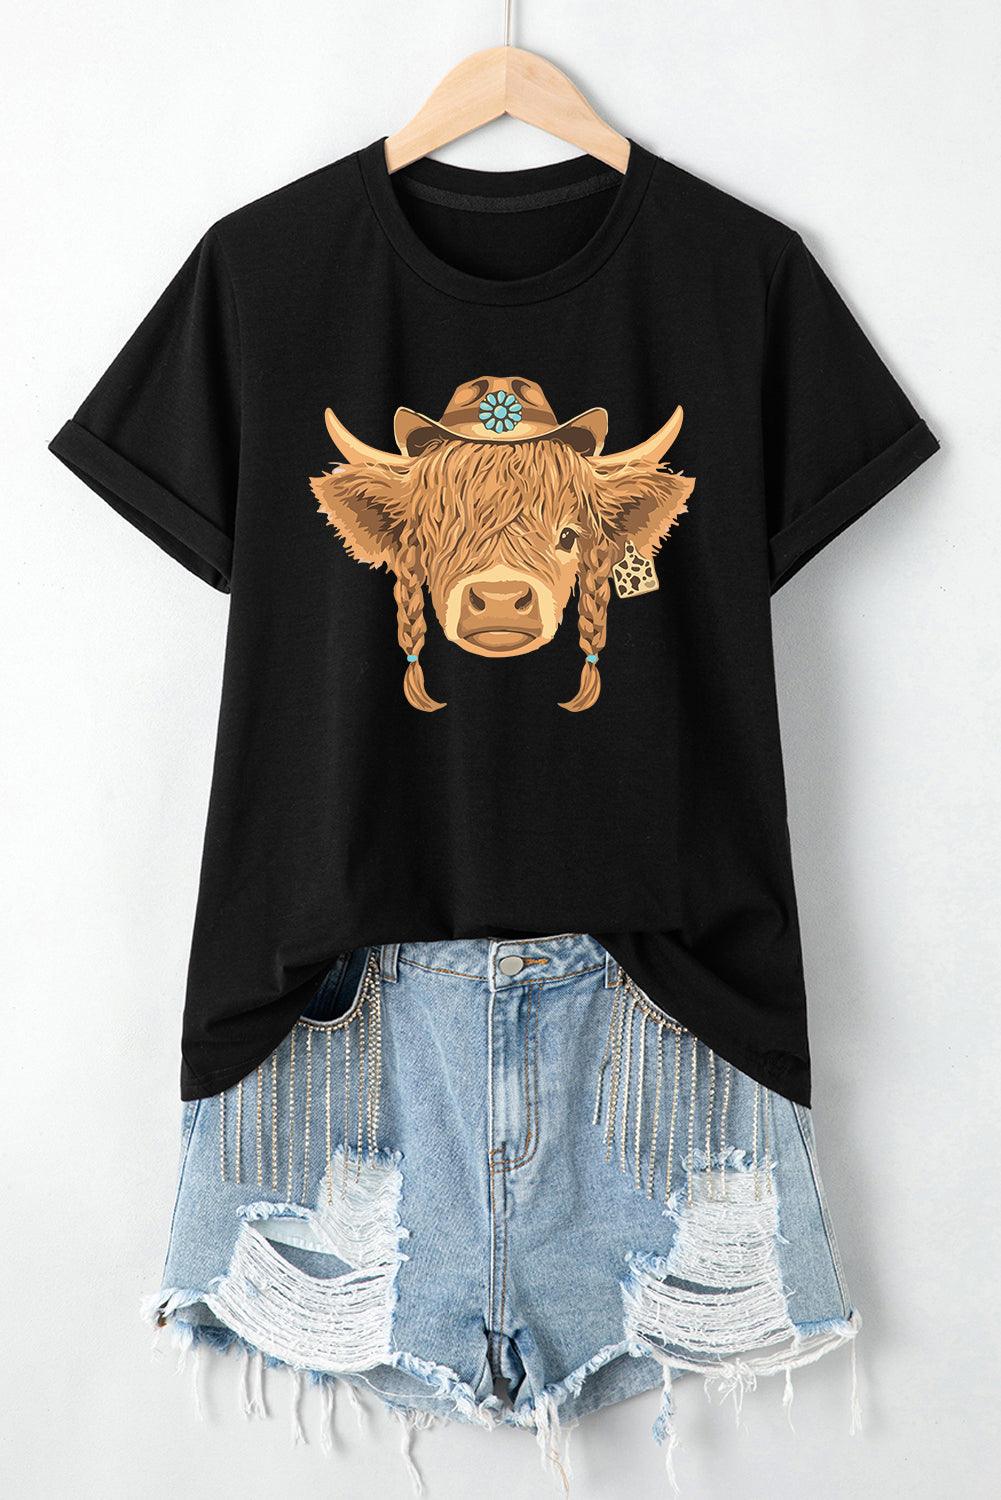 Black Western Heifer Graphic Fashion Cotton Tee